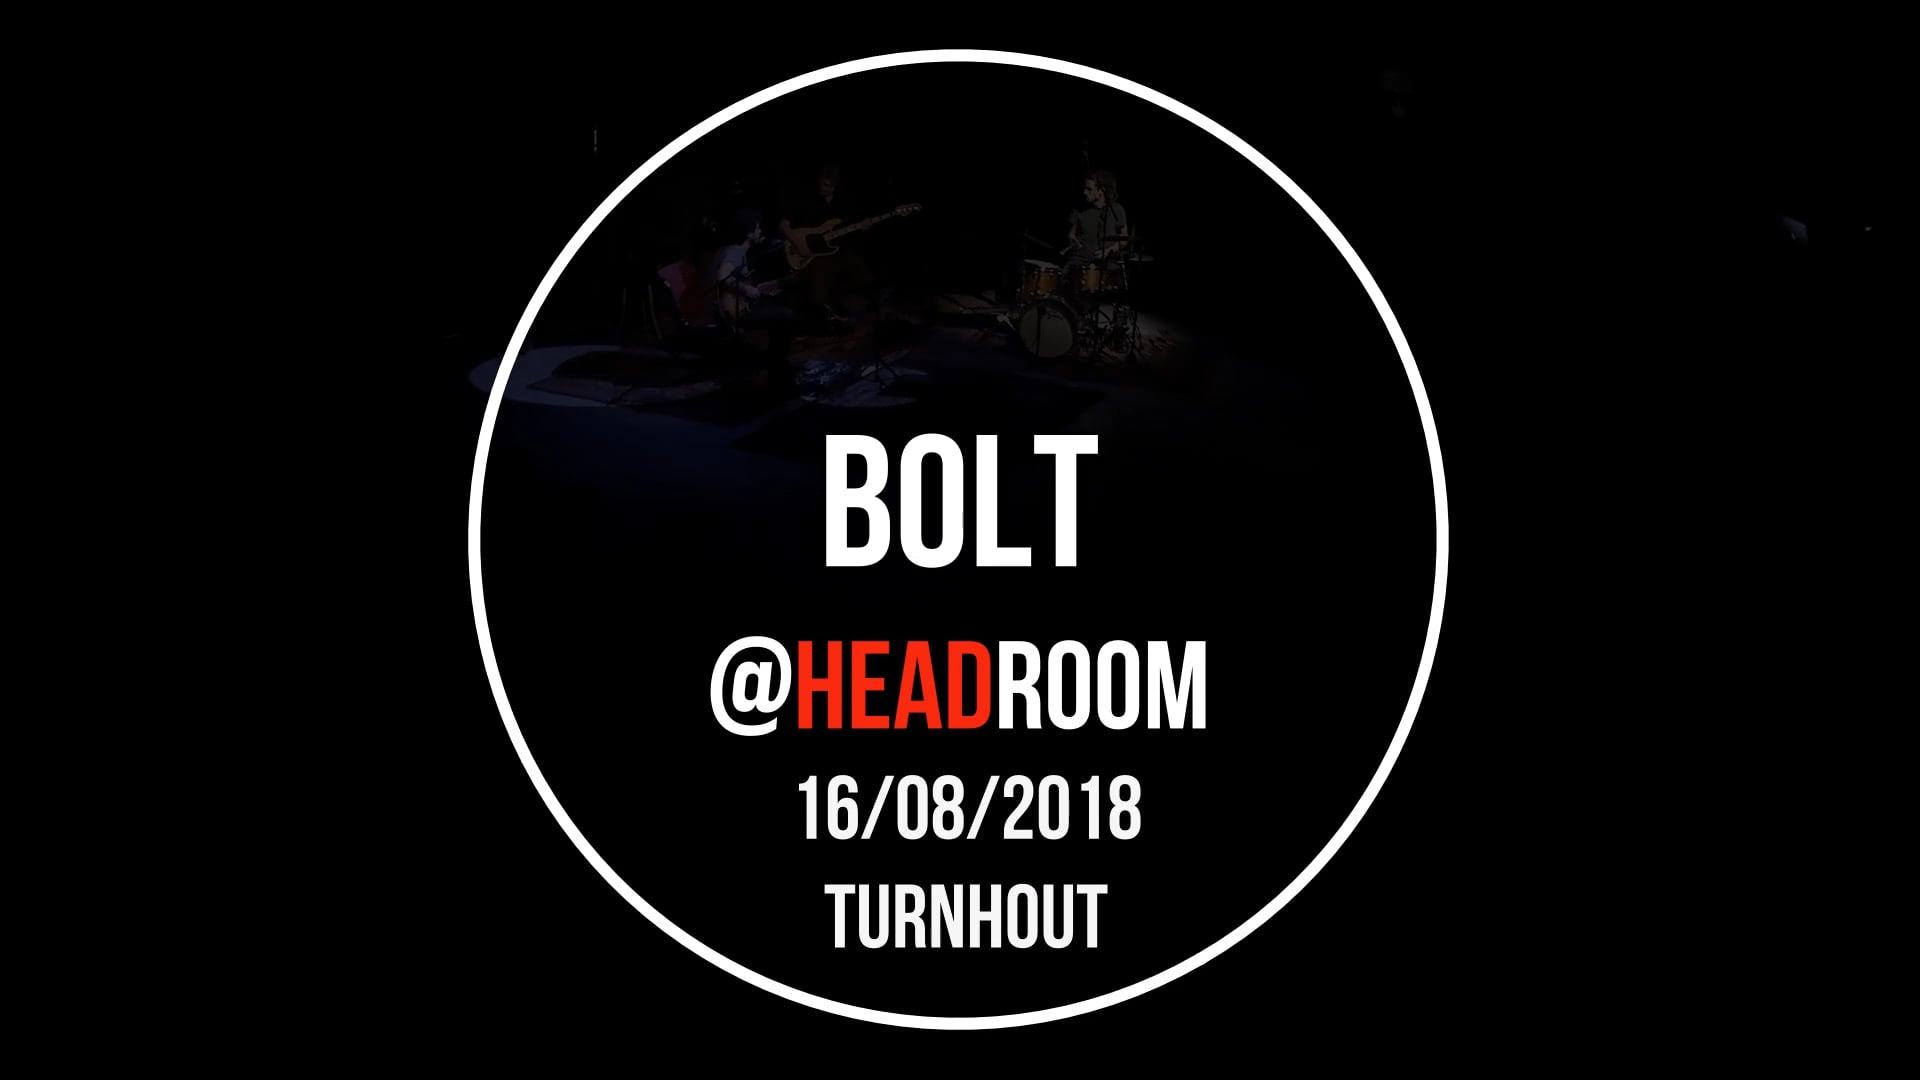 Bolt@headroom